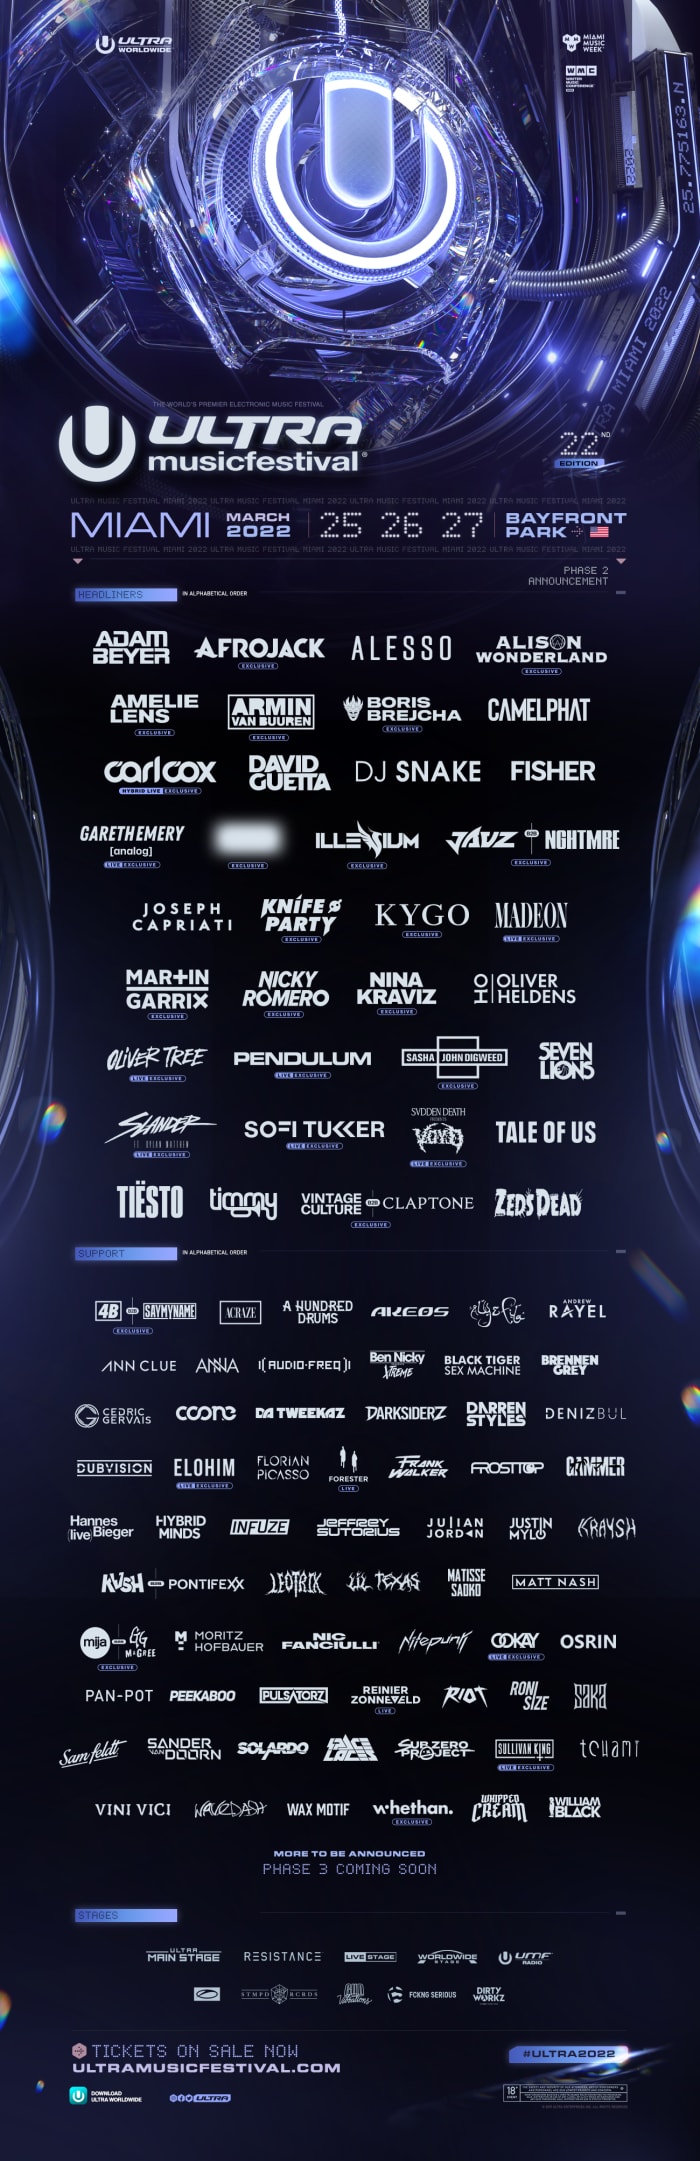 La programmation de l'Ultra Music Festival 2022 avec DJ Snake, Armin van Buuren, Kygo, Martin Garrix et plus encore.